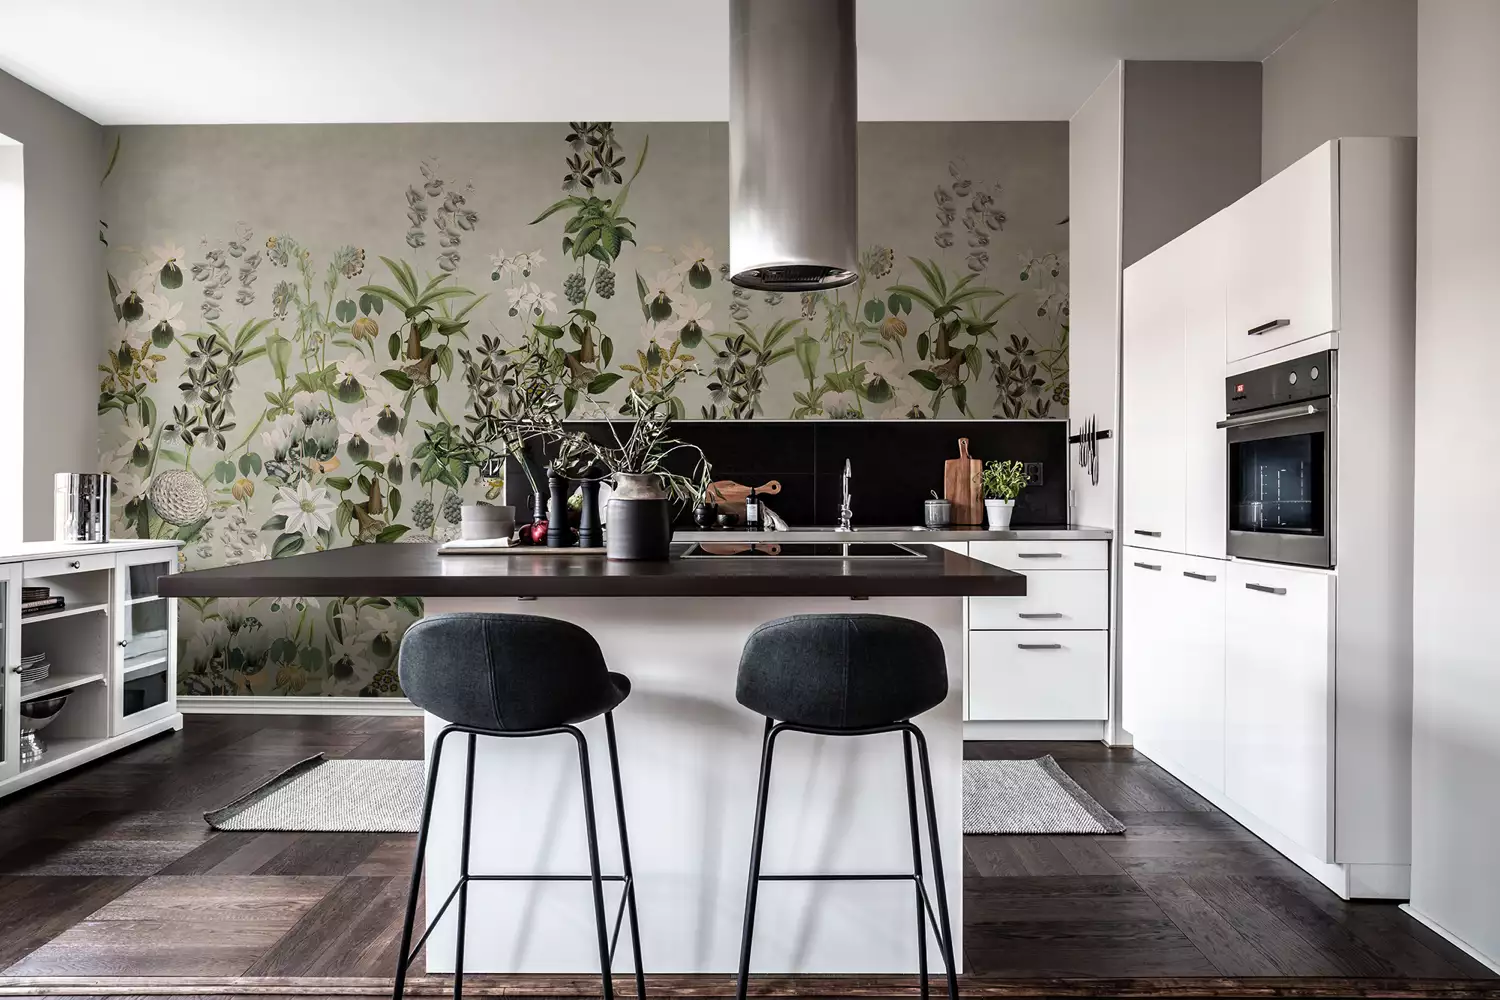 Kitchen walls - floral wallpaper